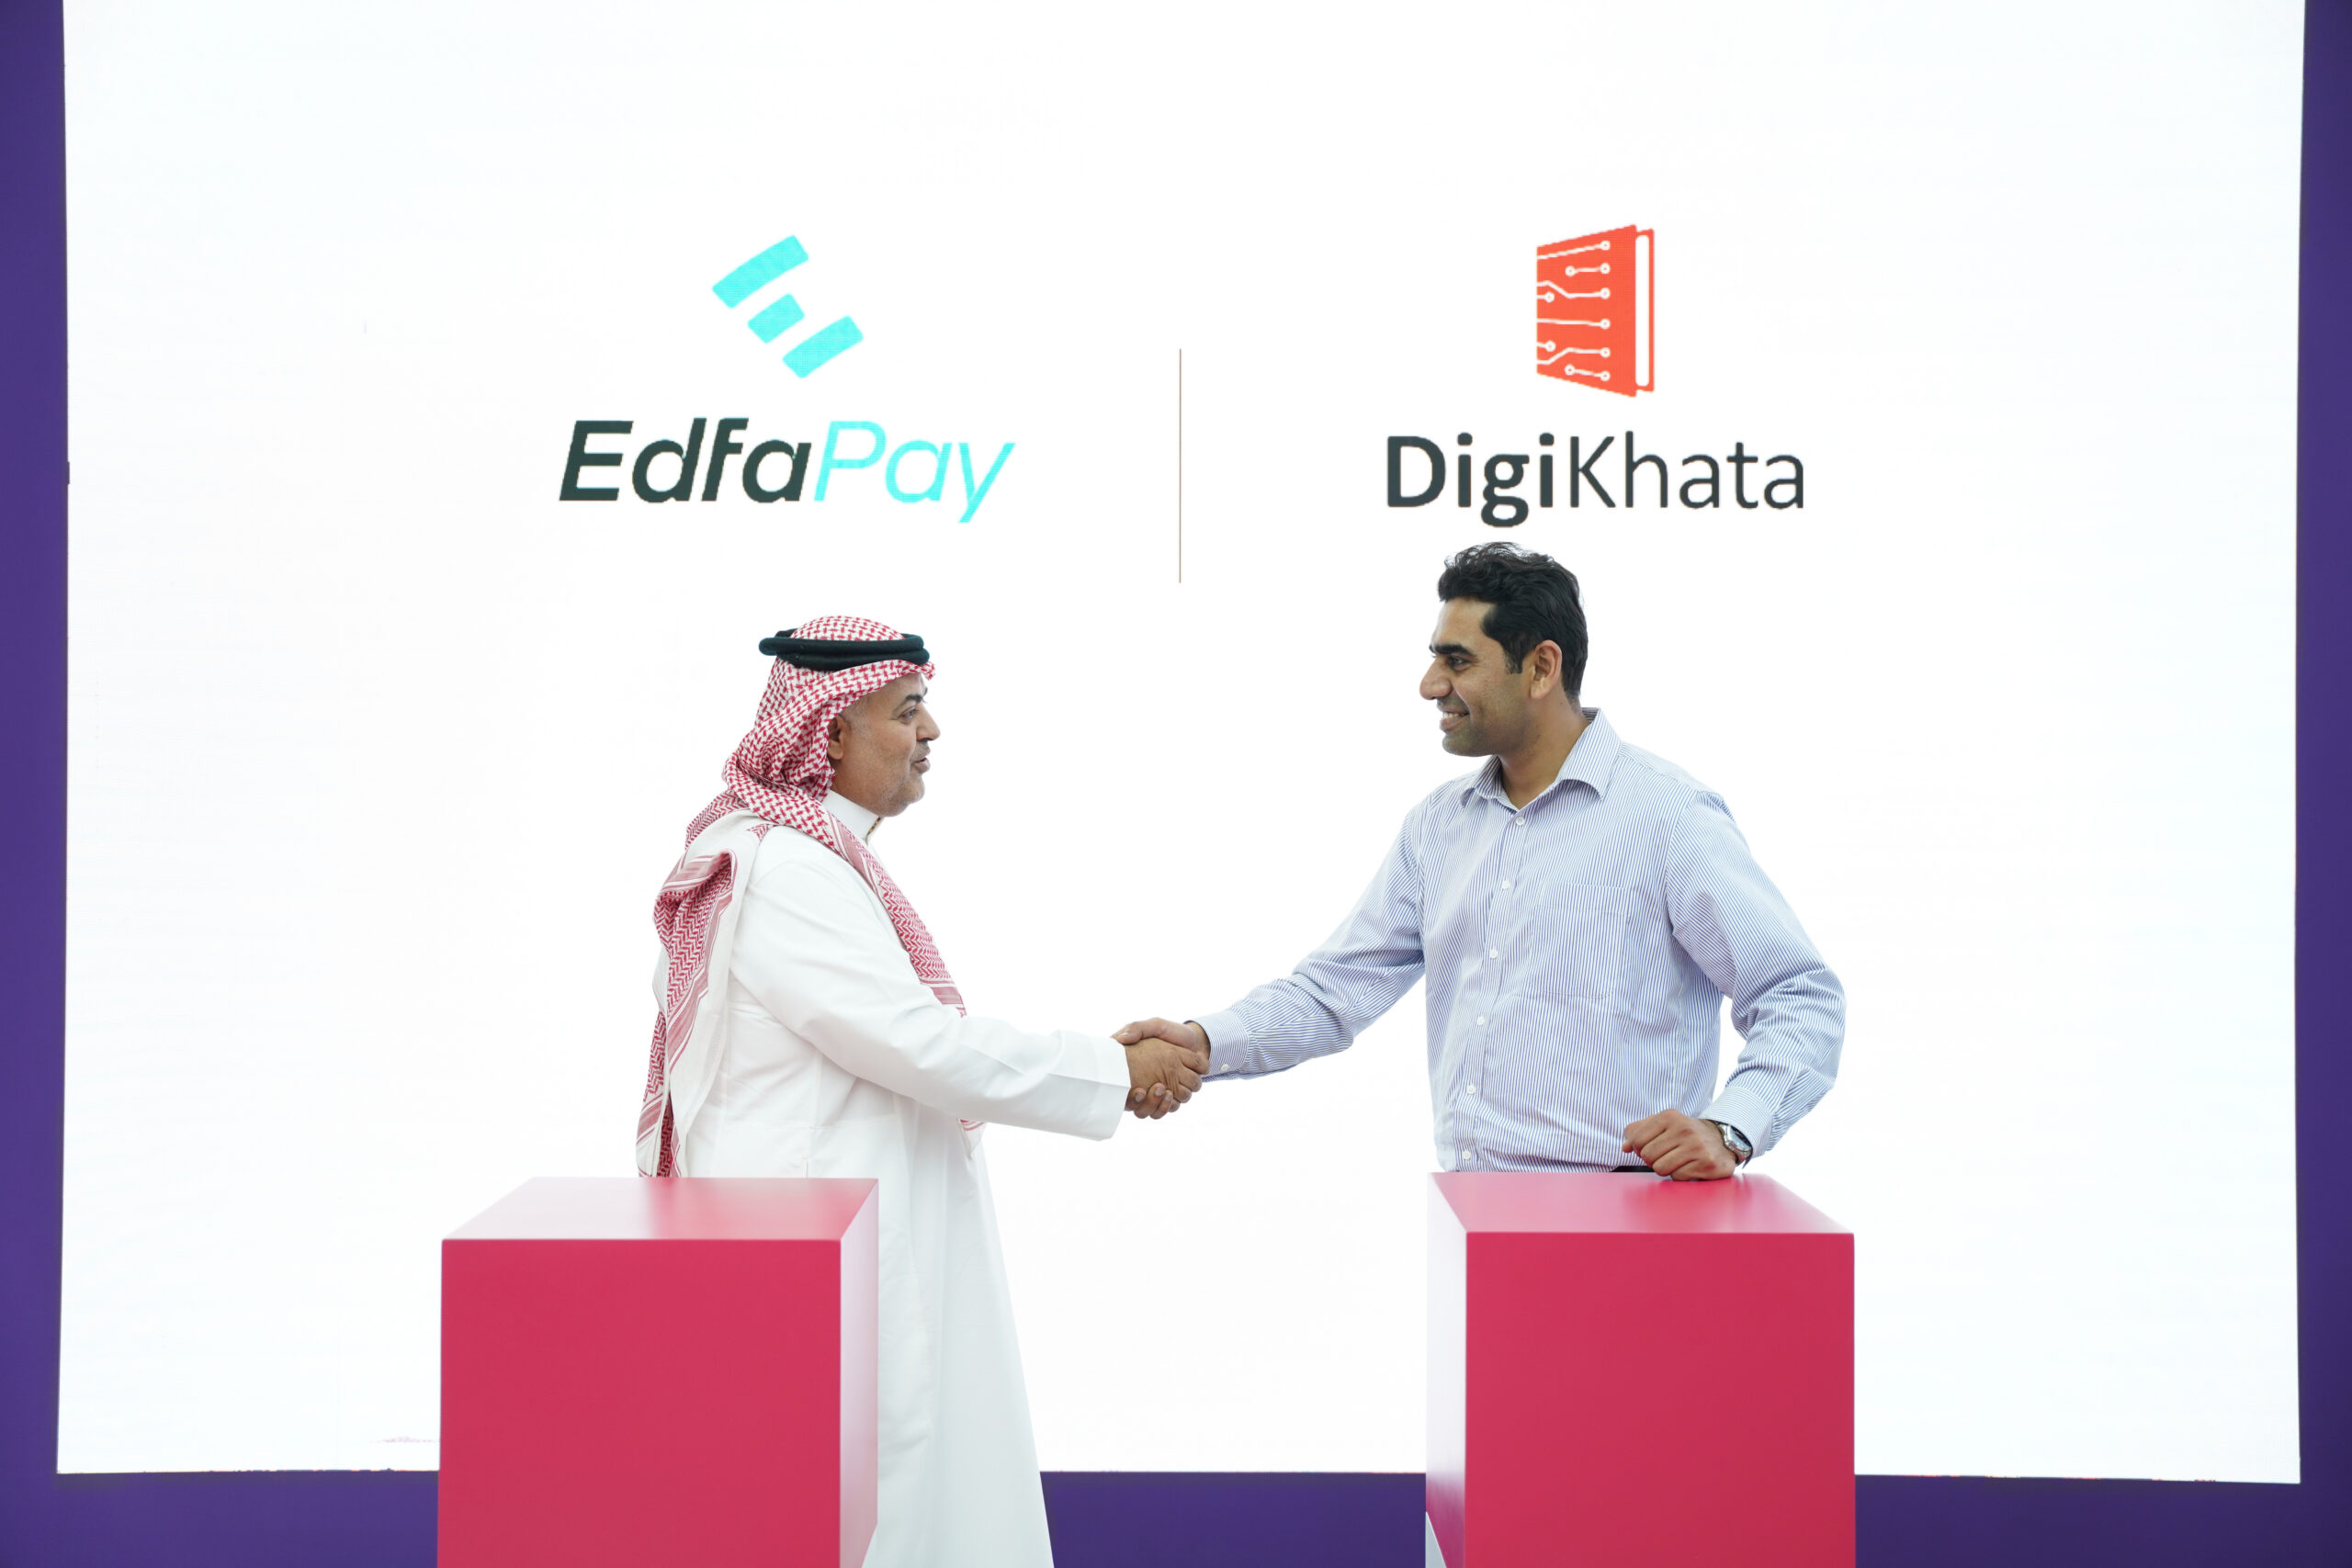 EdfaPay Expands its Global Reach through Strategic Partnership with Digikhata in Pakistan